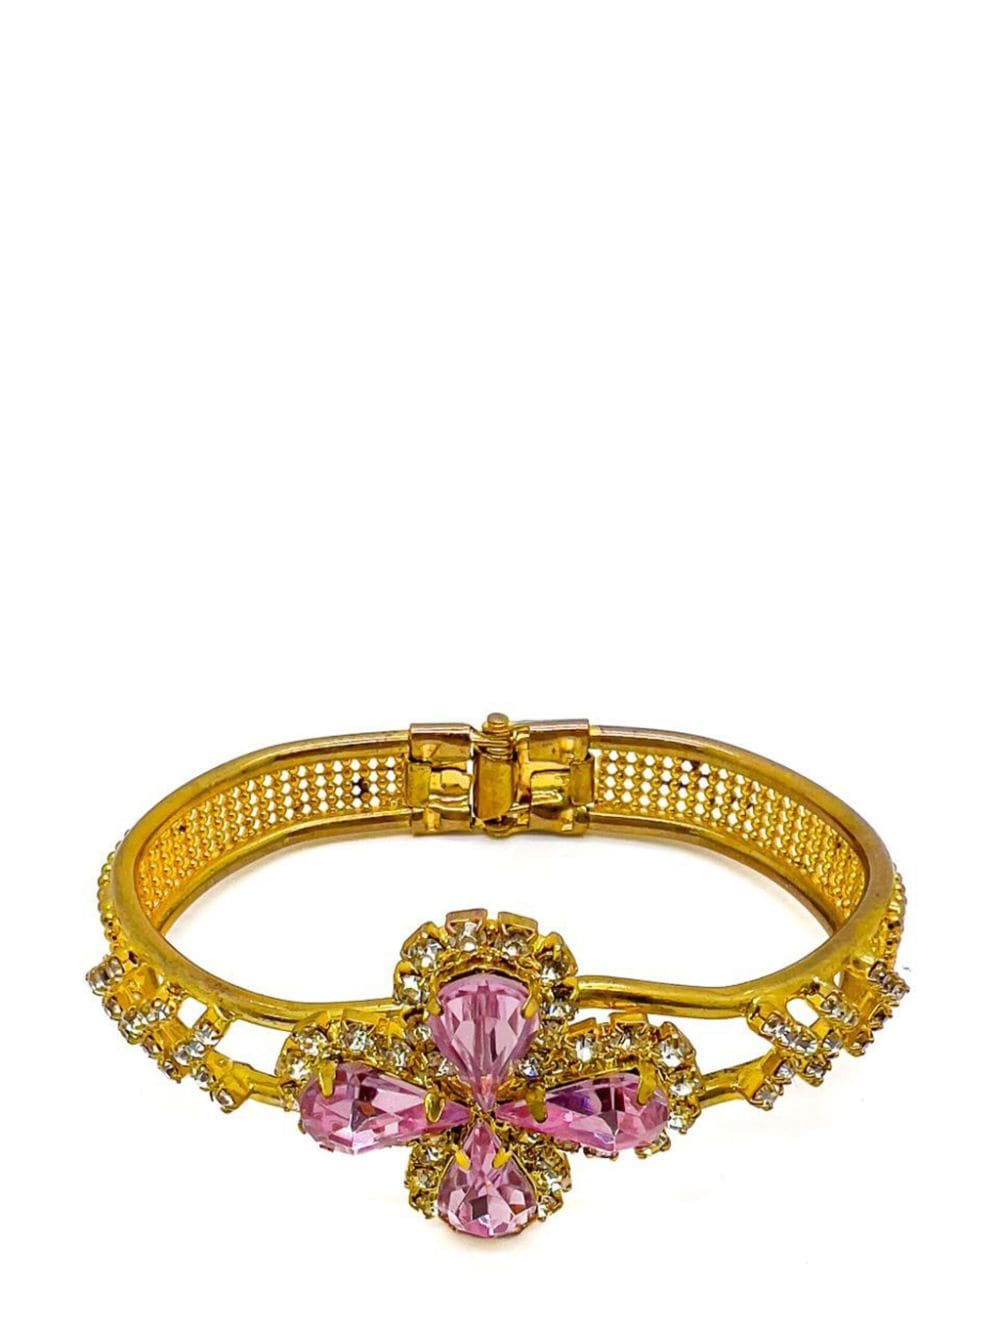 Jennifer Gibson Jewellery Vintage Victorian Inspired Pink Teardrop Crystal Cuff 1960s - Roze